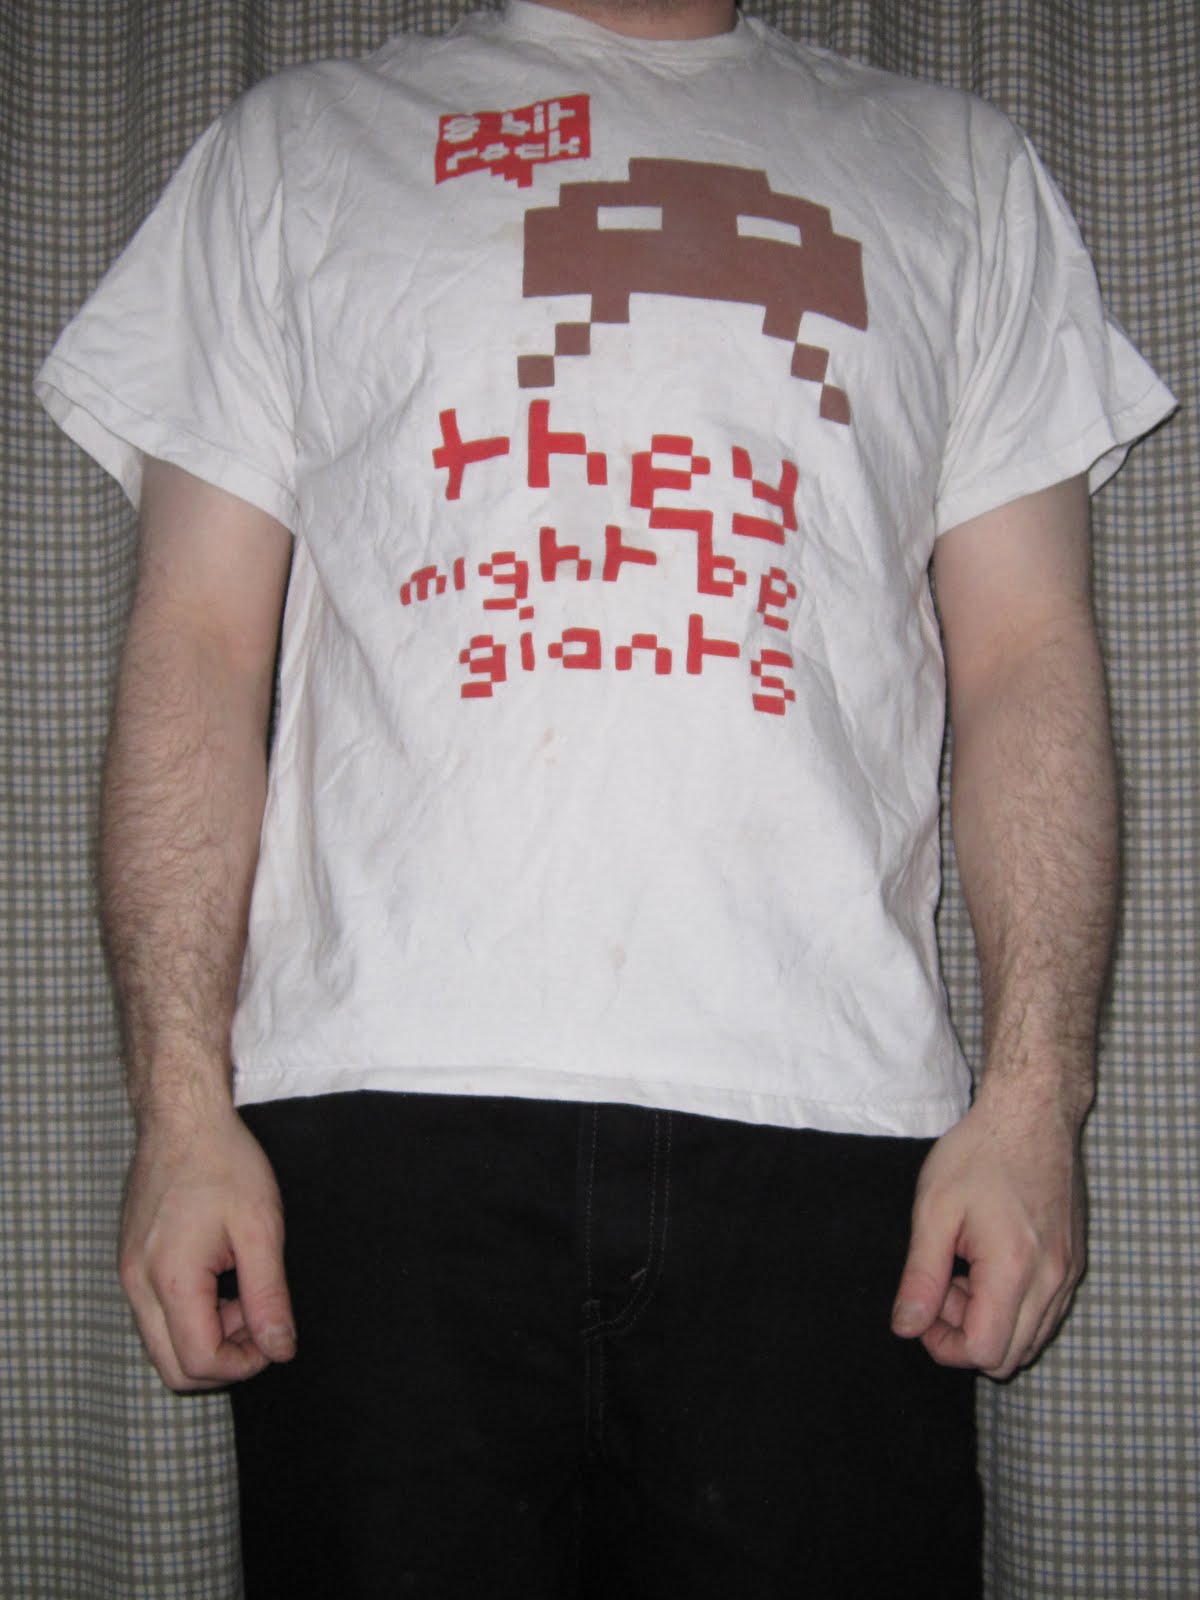 A TMBG FAN BLOG: TMBG Shirt #26: 8 Bit Rock